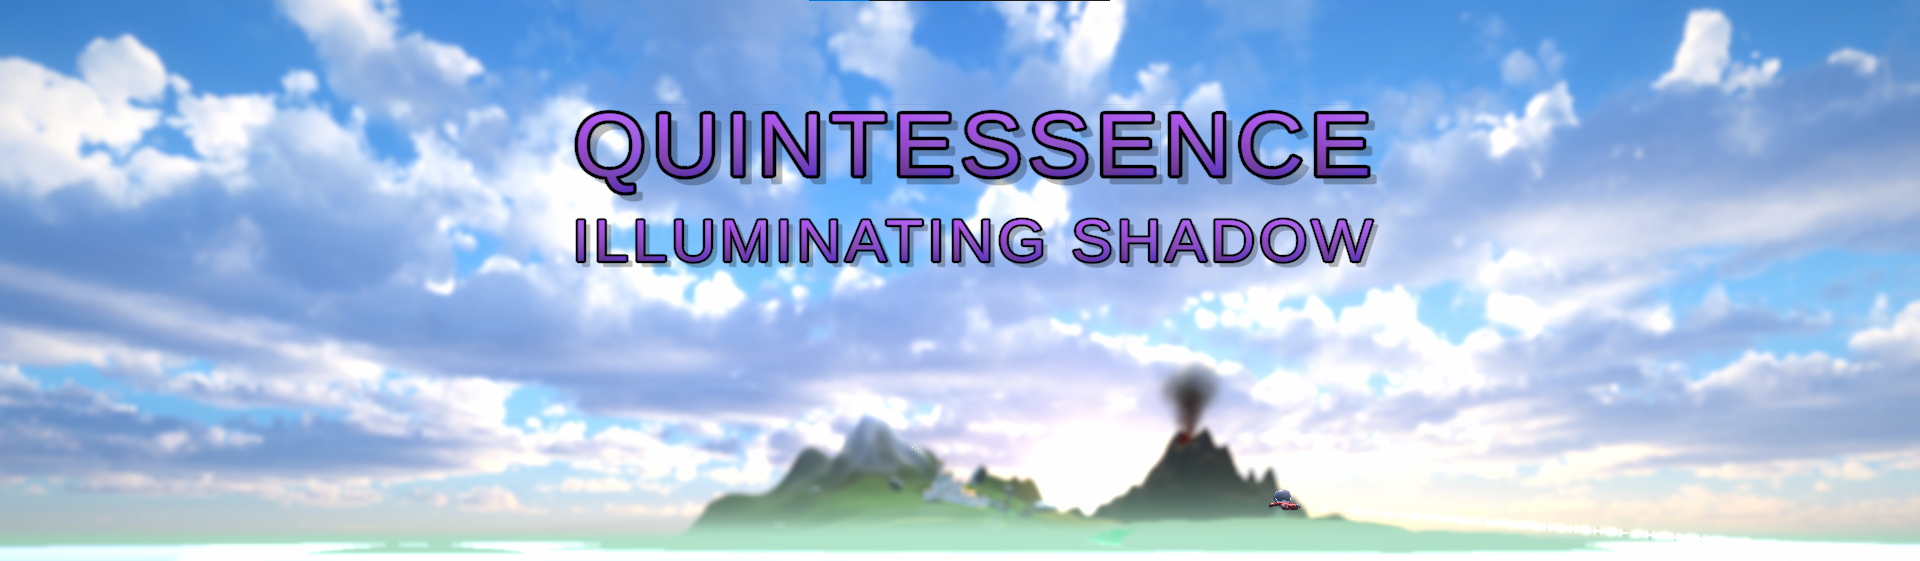 Quintessence: Illuminating Shadow